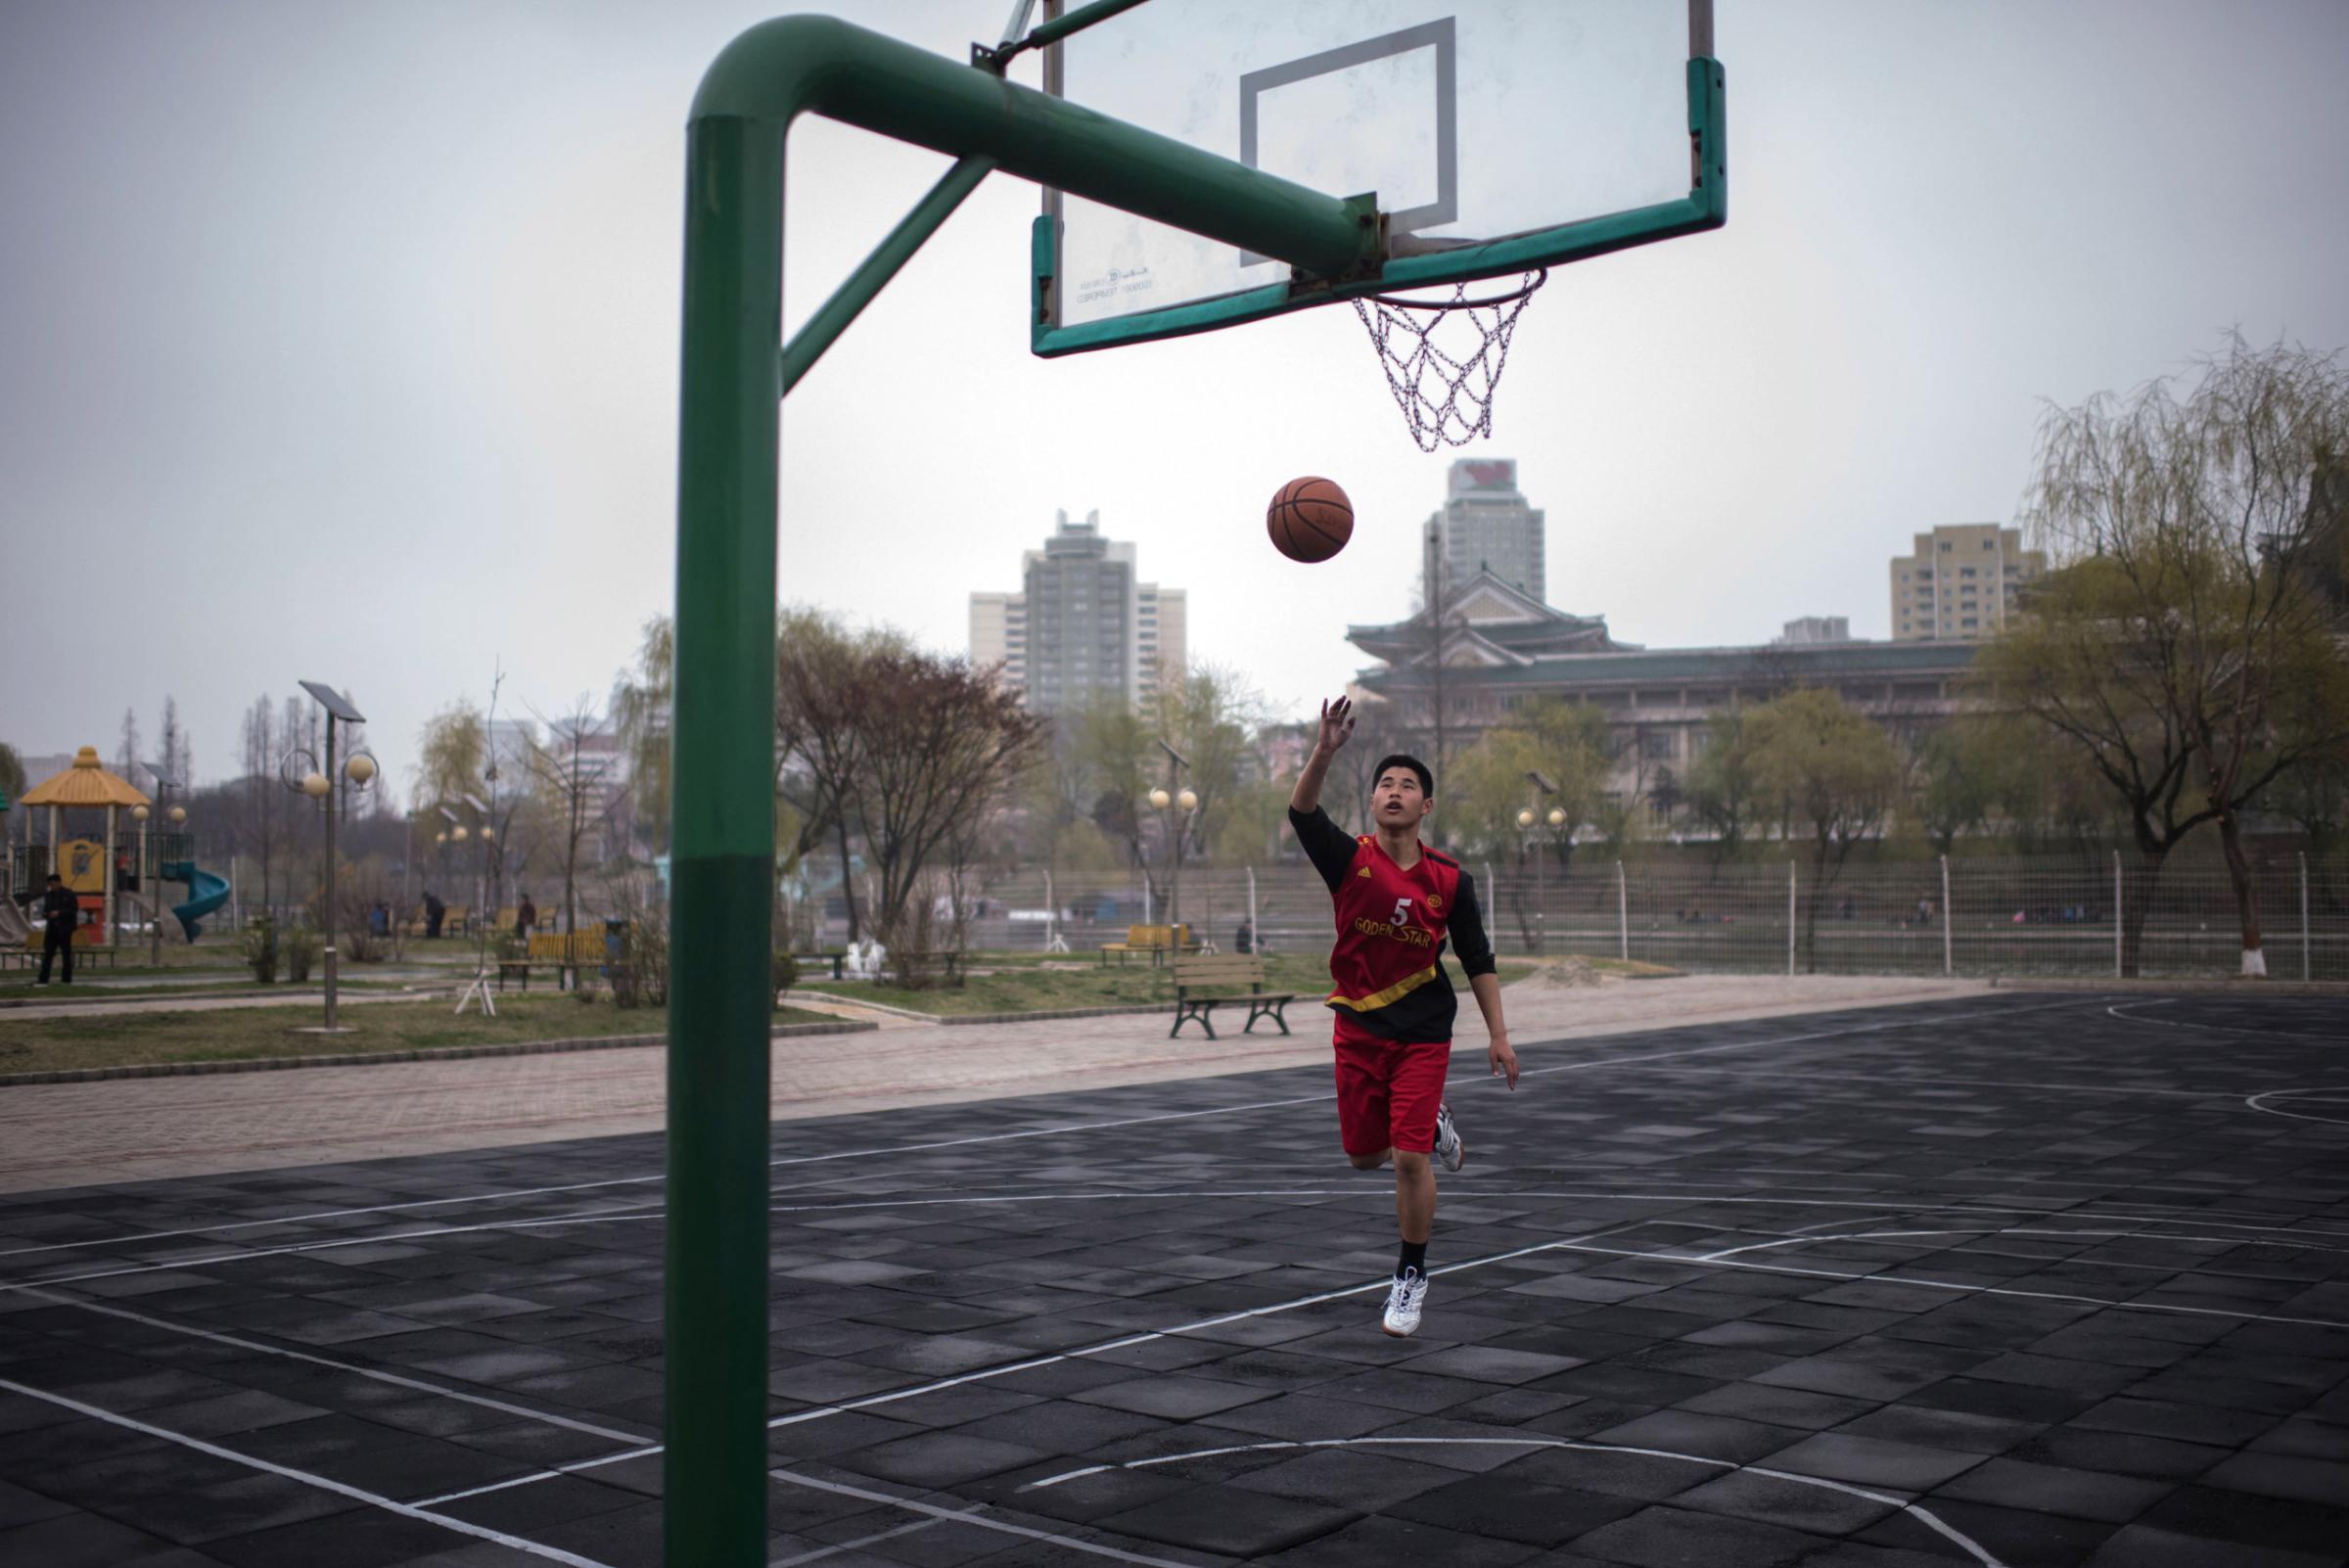 north-korea-ed-jones-basketball-player